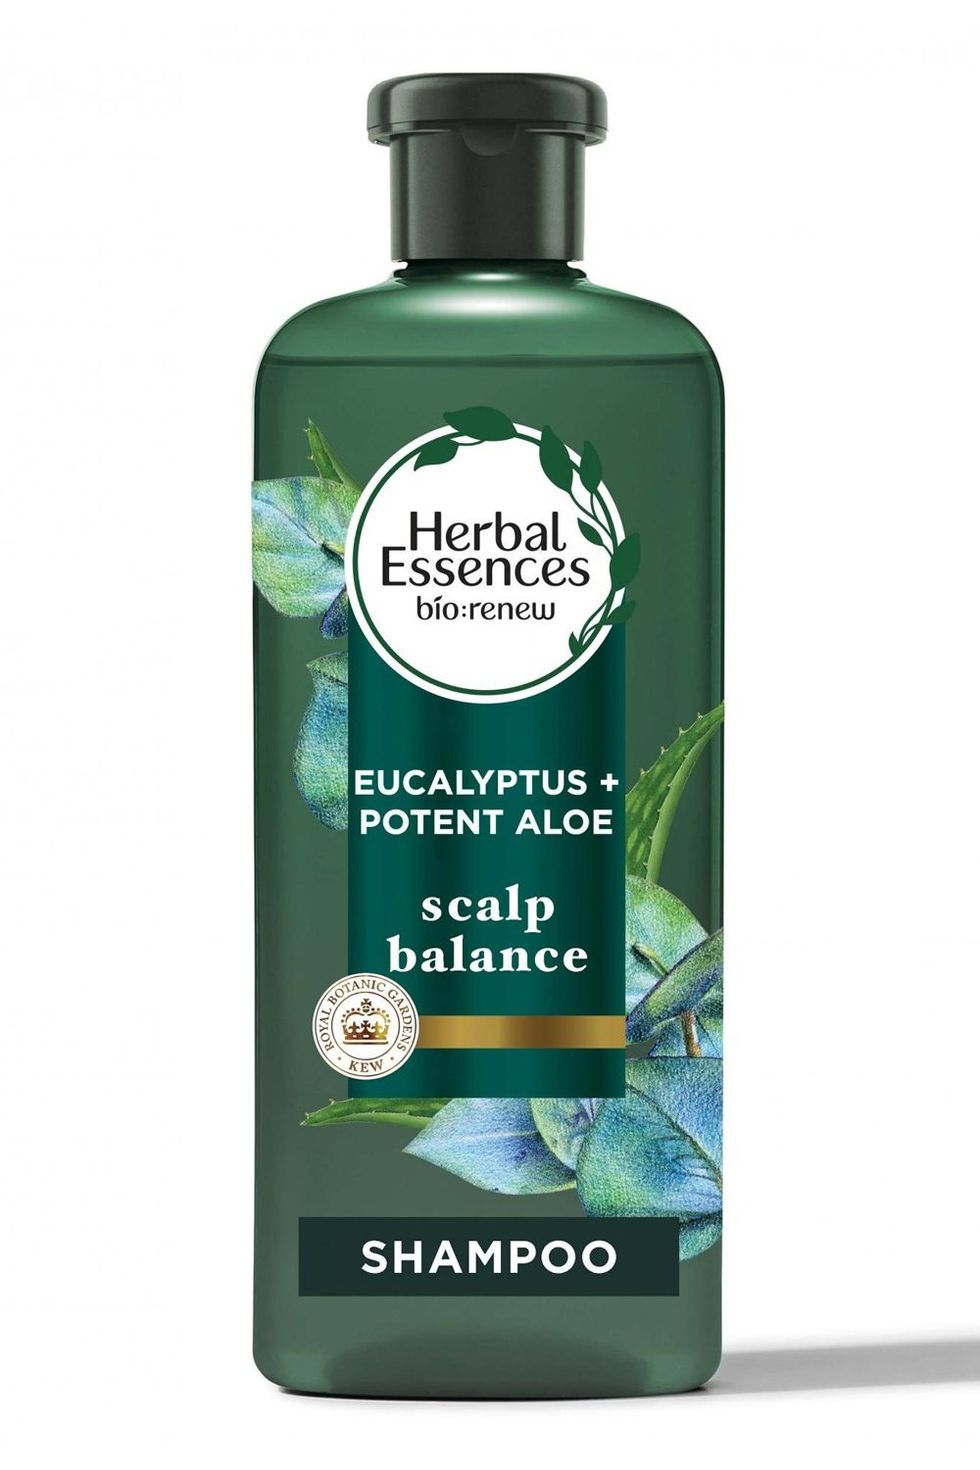 Herbal Essences Bio:Renew Eucalyptus + Potent Aloe Scalp Balance Shampoo